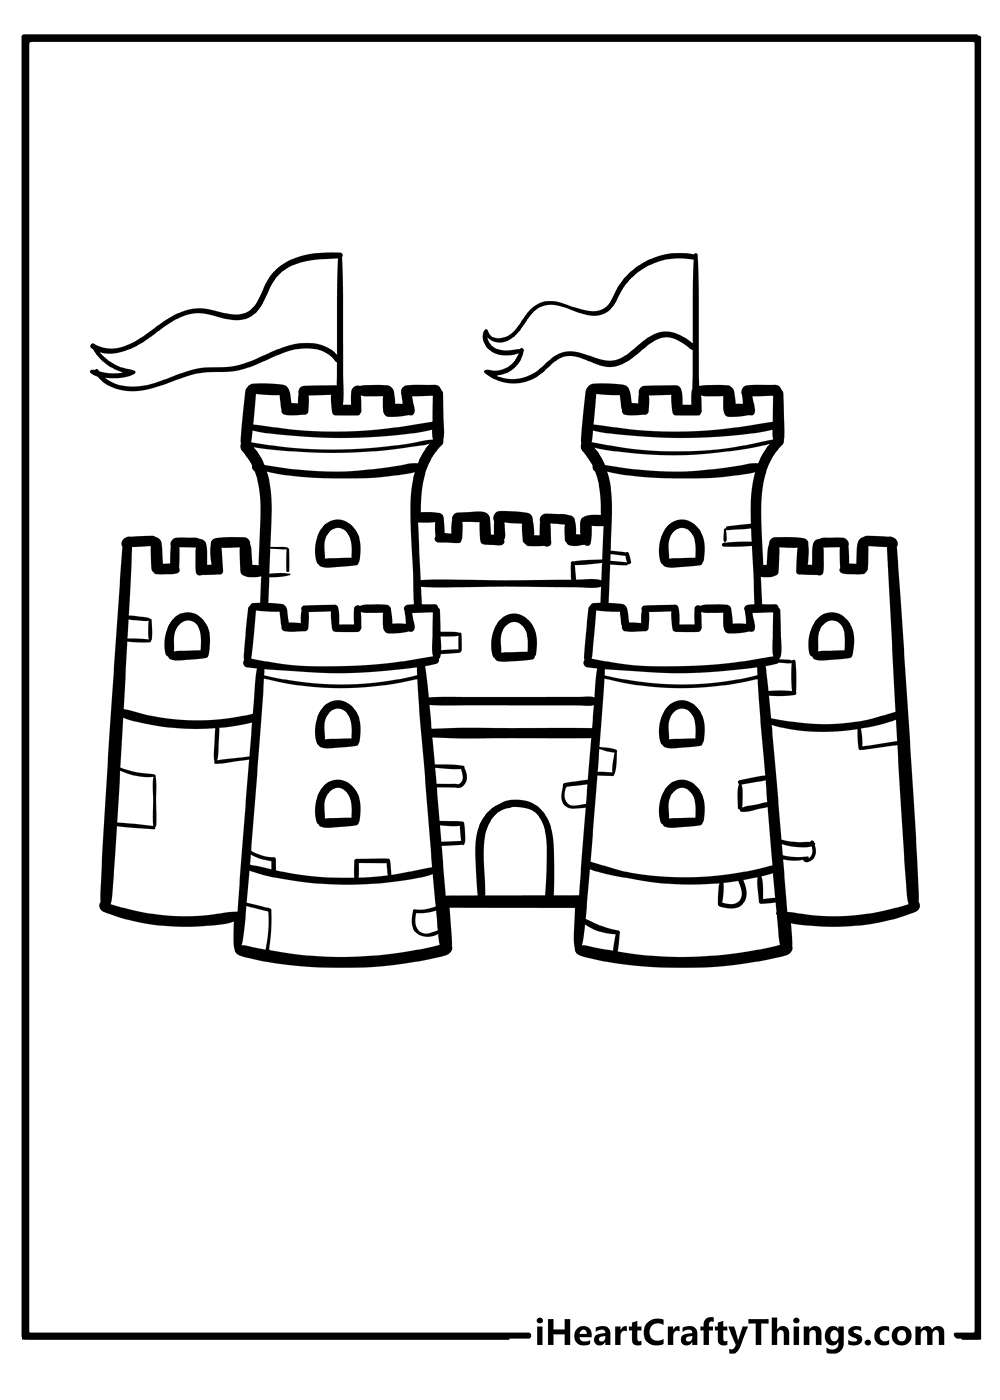 Castle Coloring Sheet for children free download